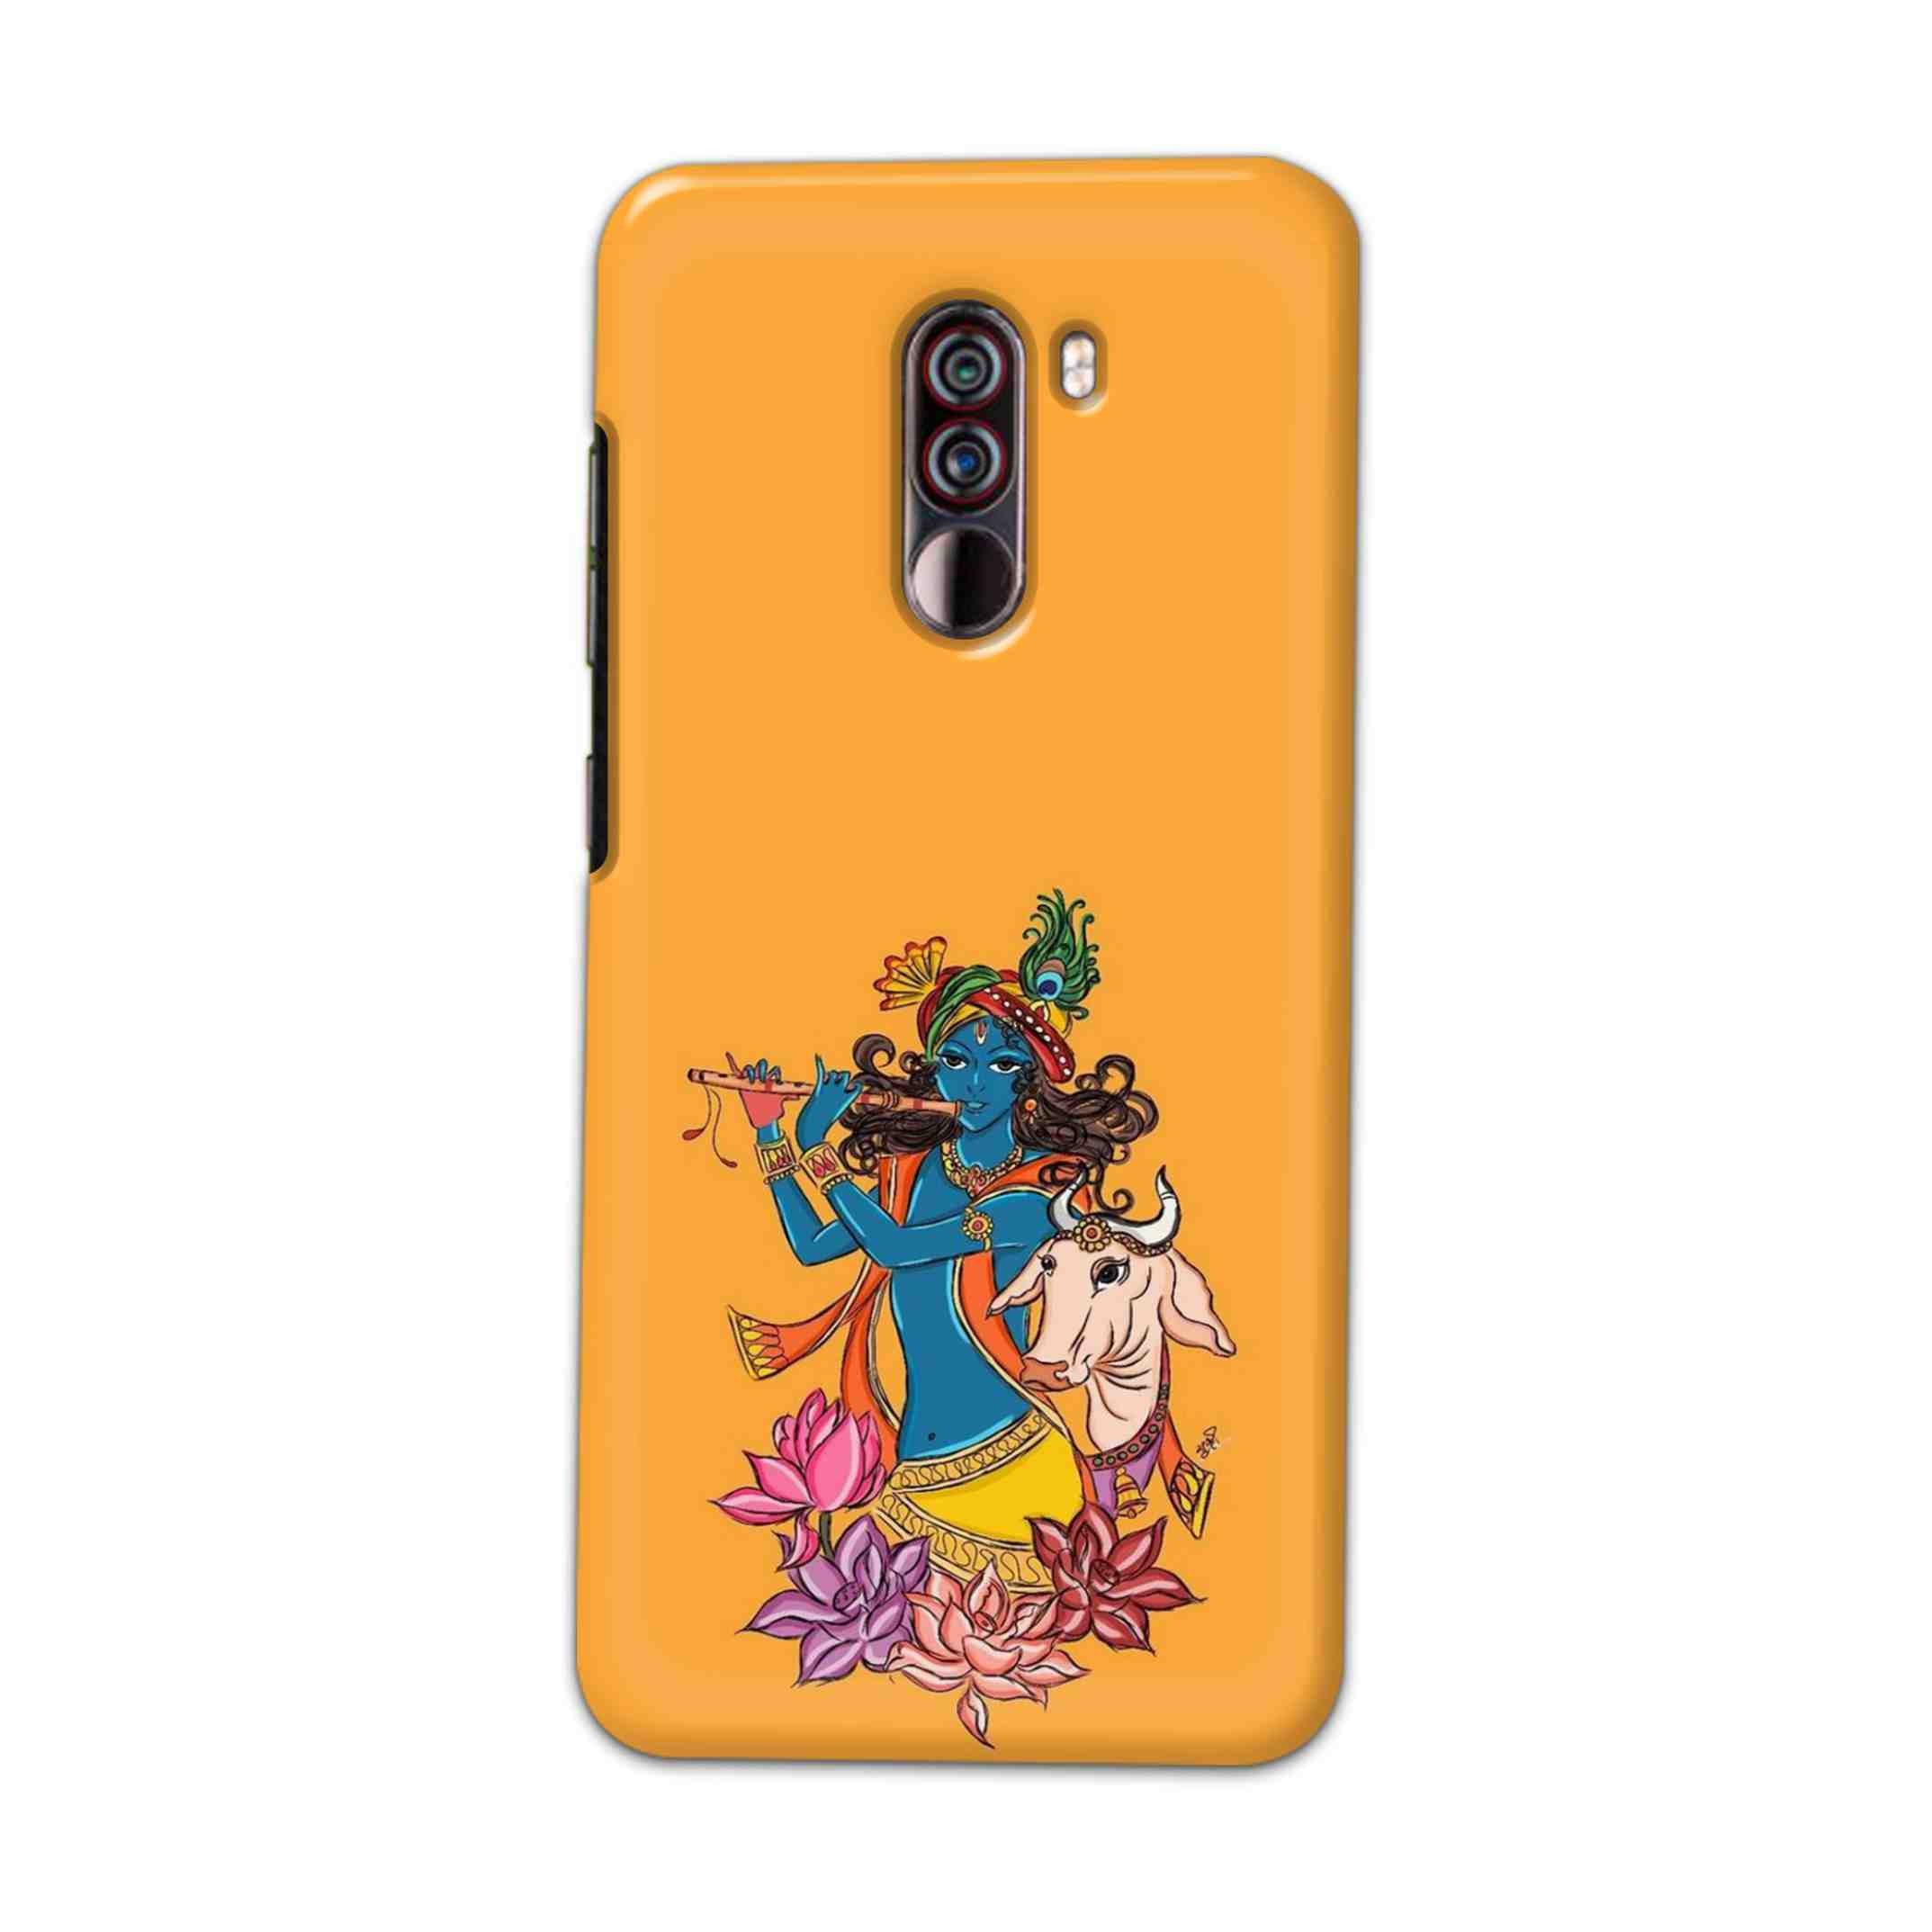 Buy Radhe Krishna Hard Back Mobile Phone Case Cover For Xiaomi Pocophone F1 Online